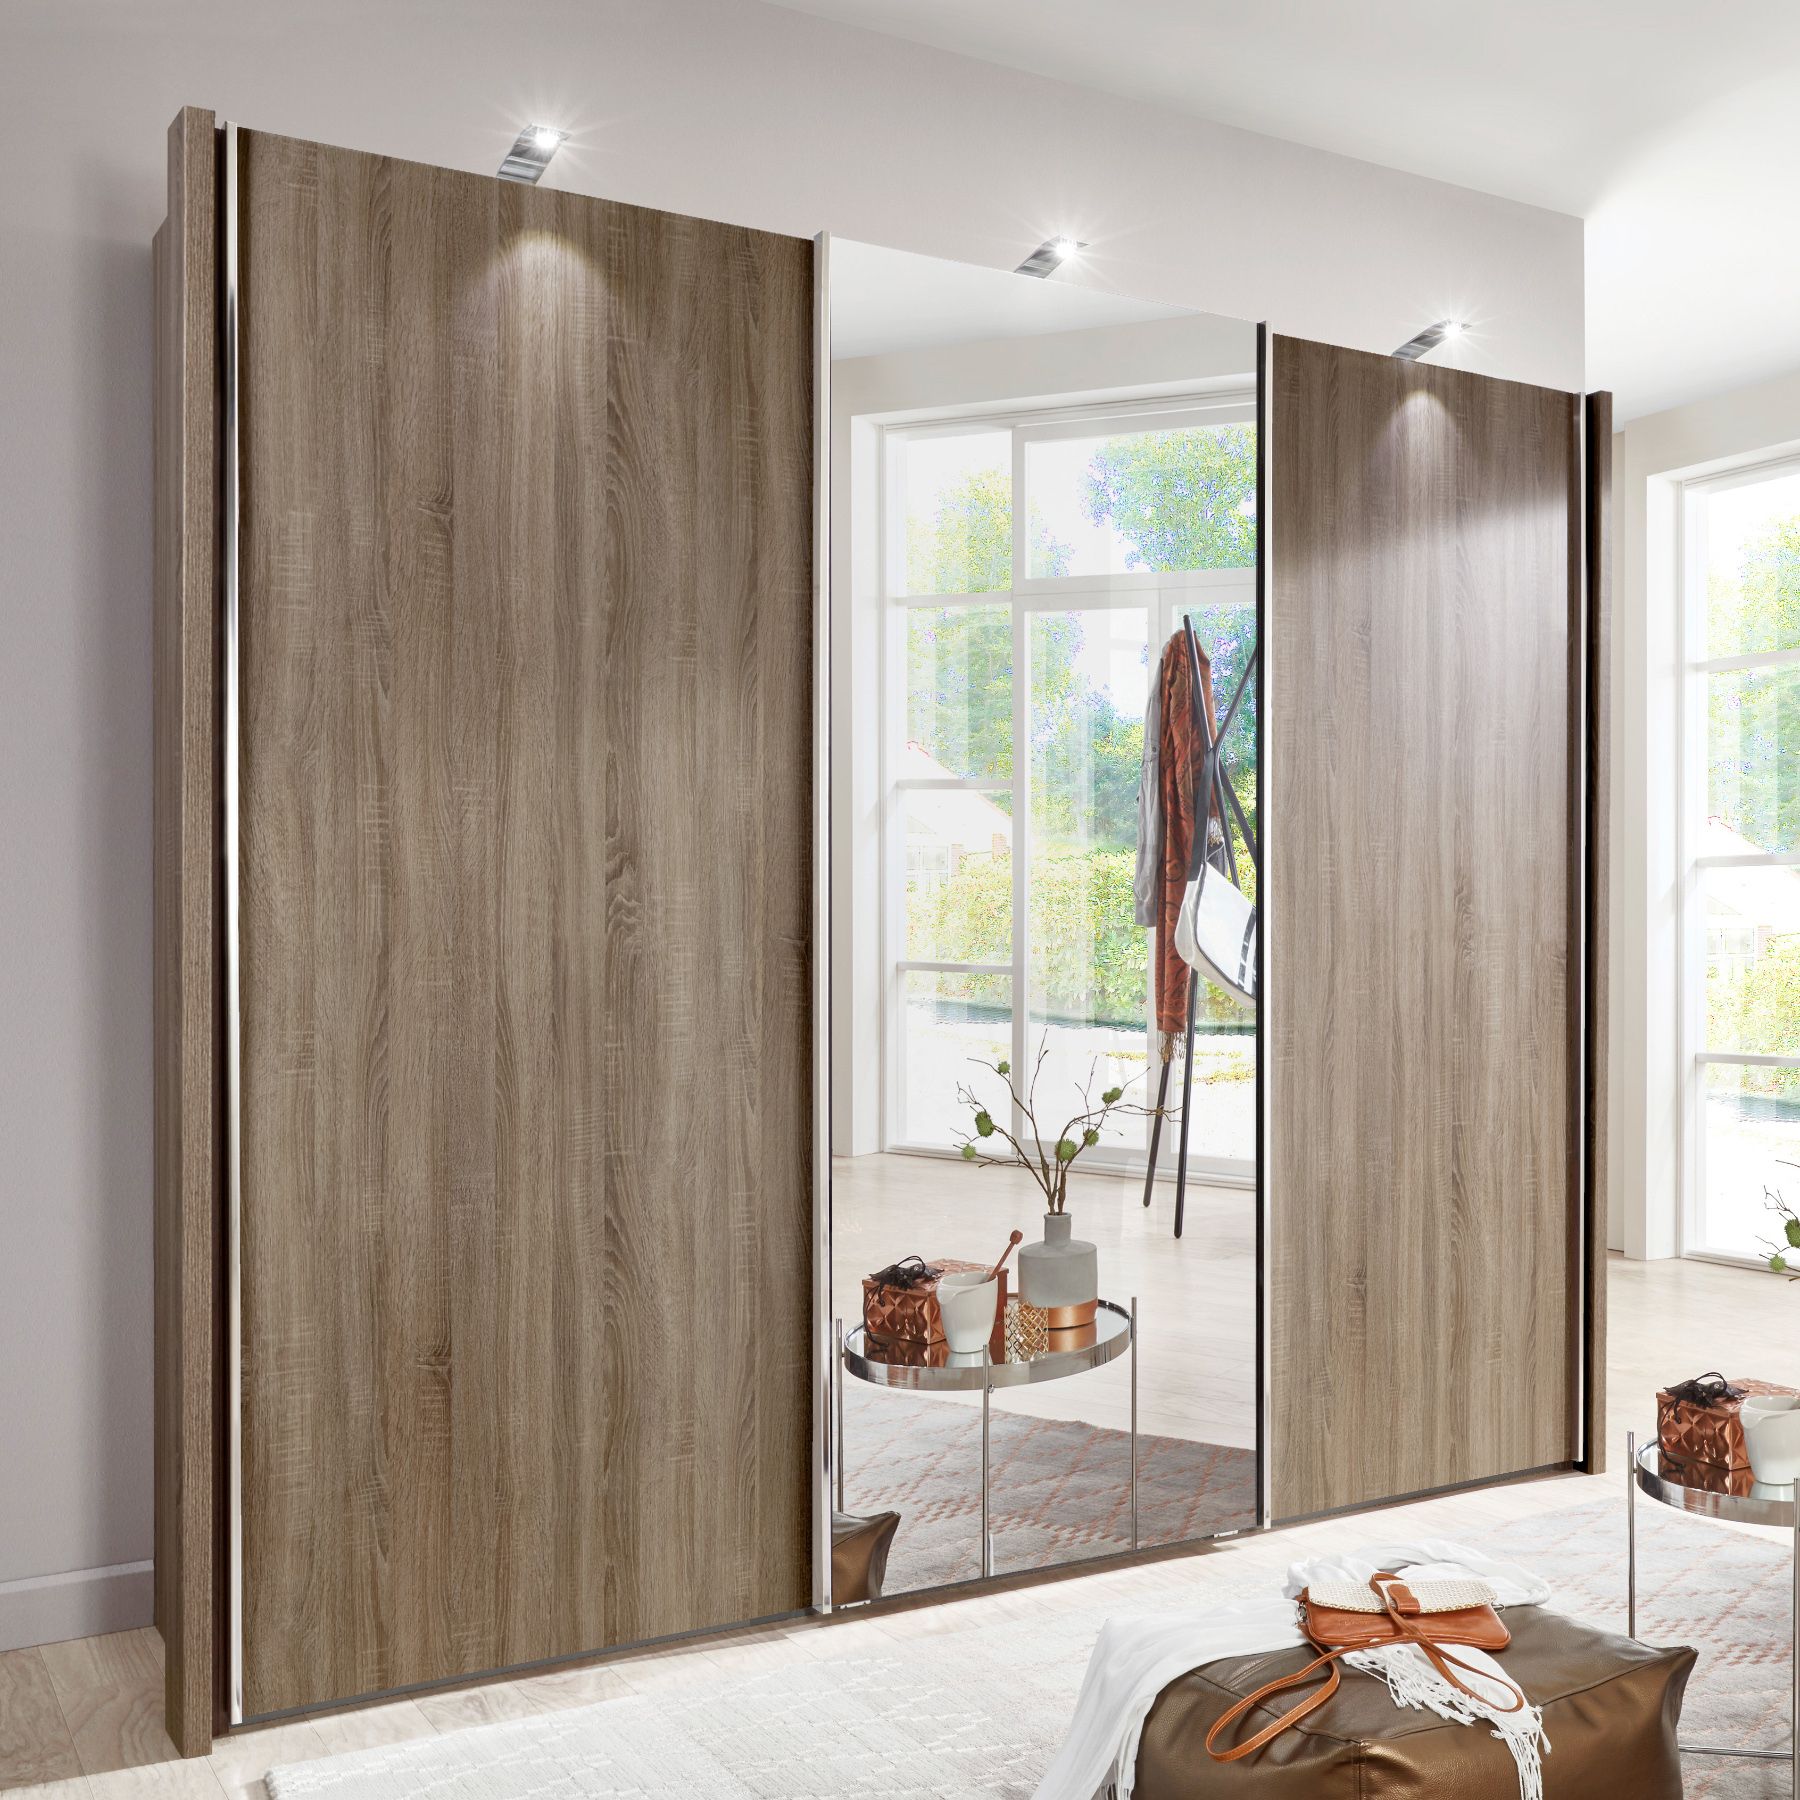 Monroe Plus – 2 Rustic Oak Doors & 1 Mirrored Door – 3 Door Sliding Wardrobe  – Semi Fitted Wardrobes – Progressive Furnishings Intended For Oak Wardrobes For Sale (View 16 of 20)